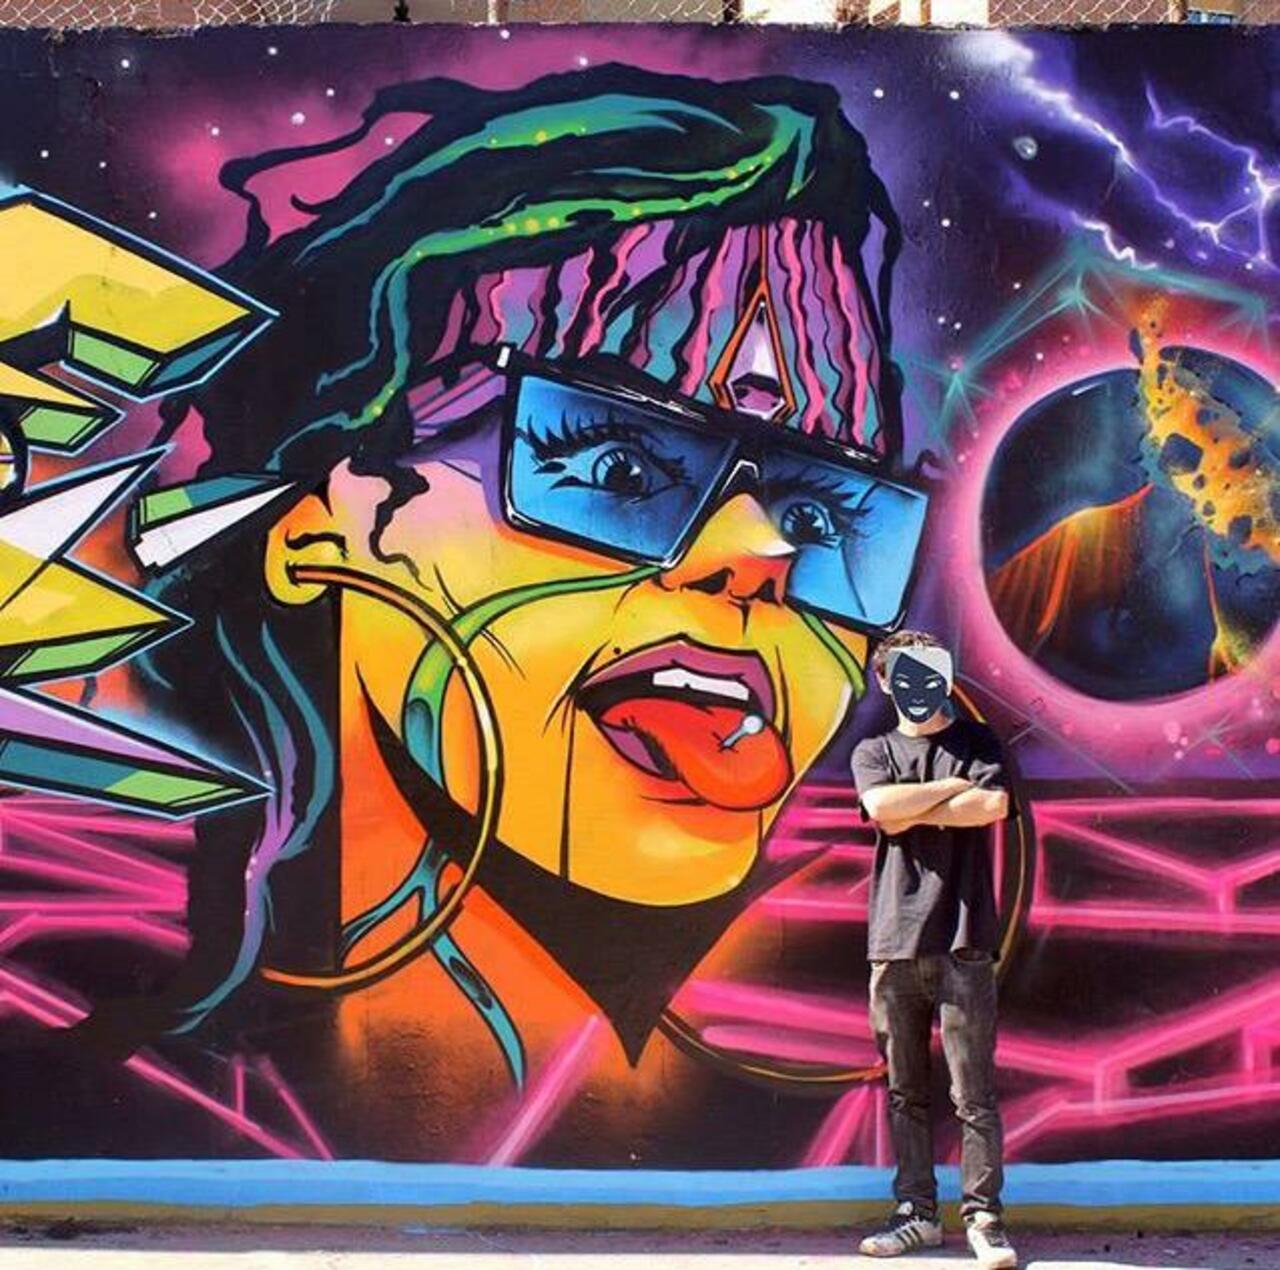 Brilliant new Street Art by the artist Jaycaes

#art #graffiti #mural #streetart http://t.co/TOMYZ875tn